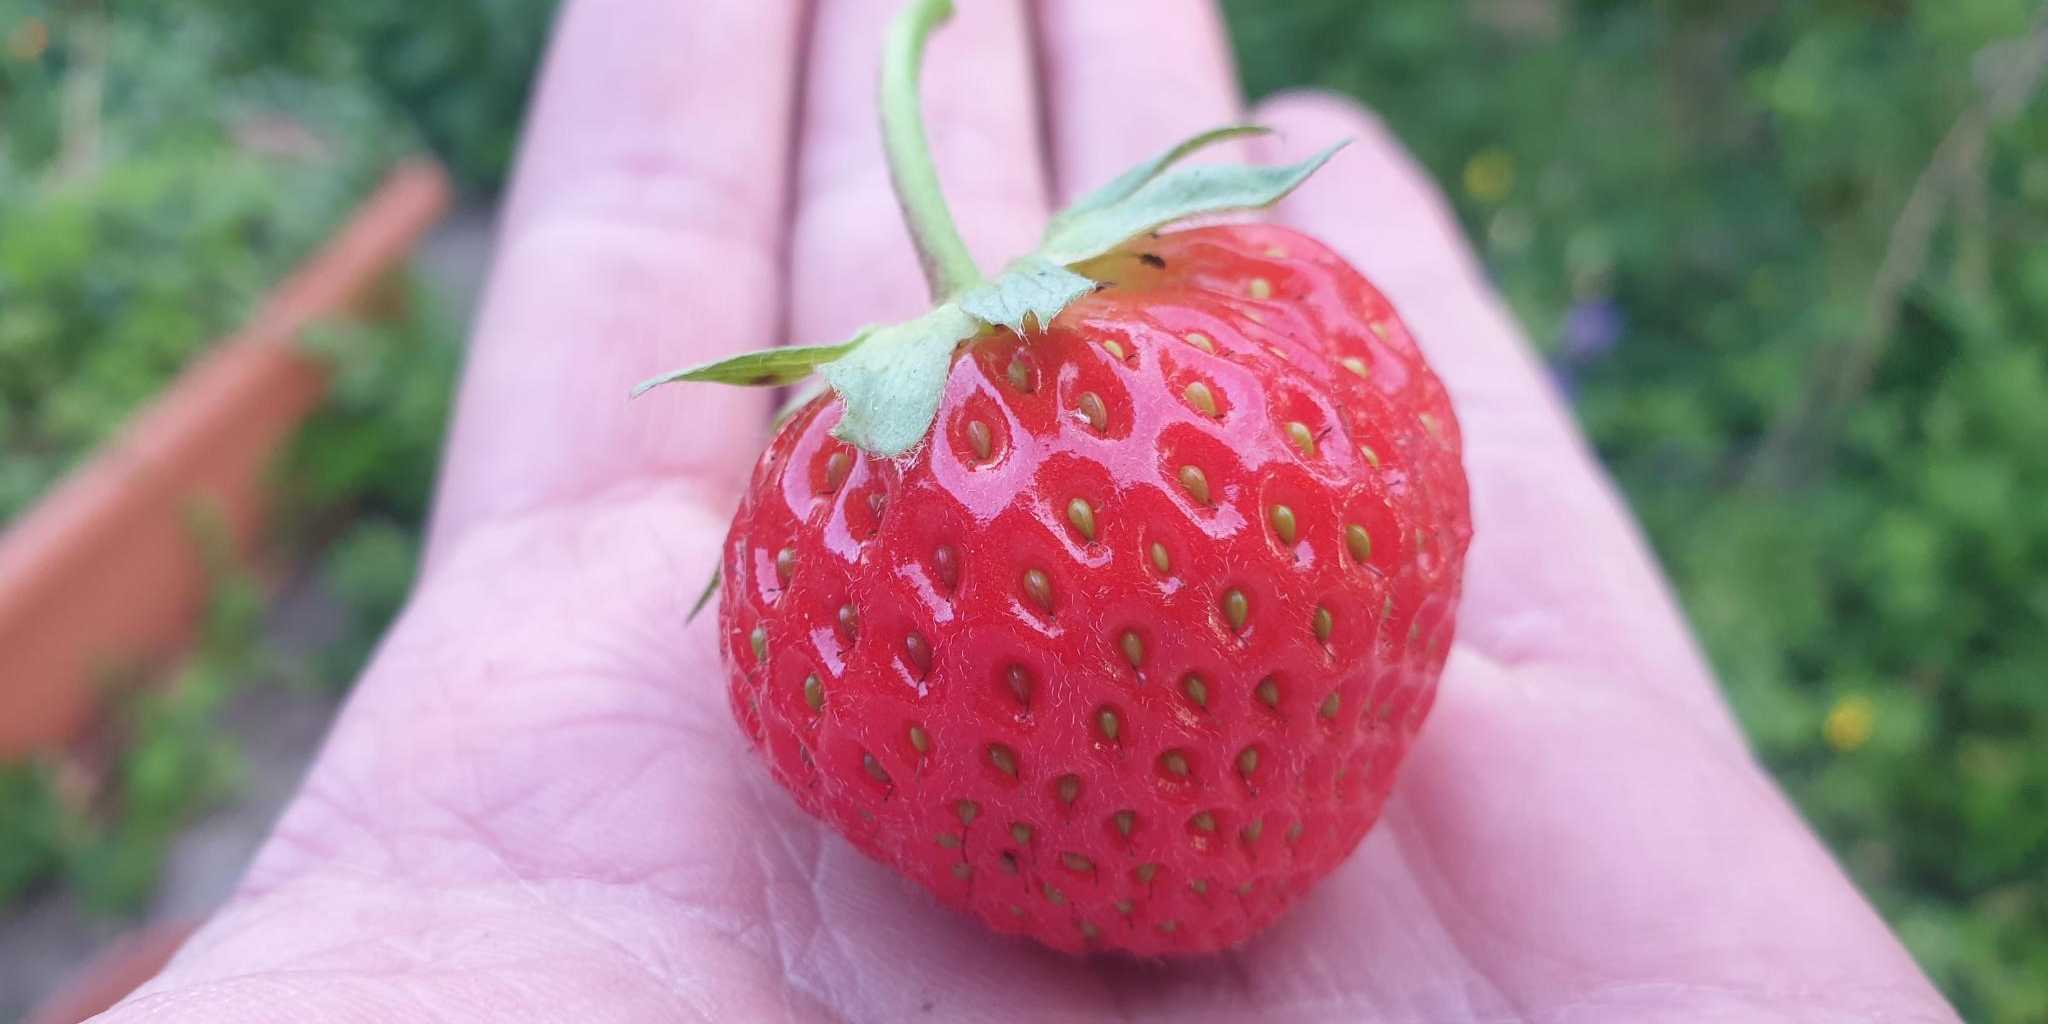 strawberry on hand